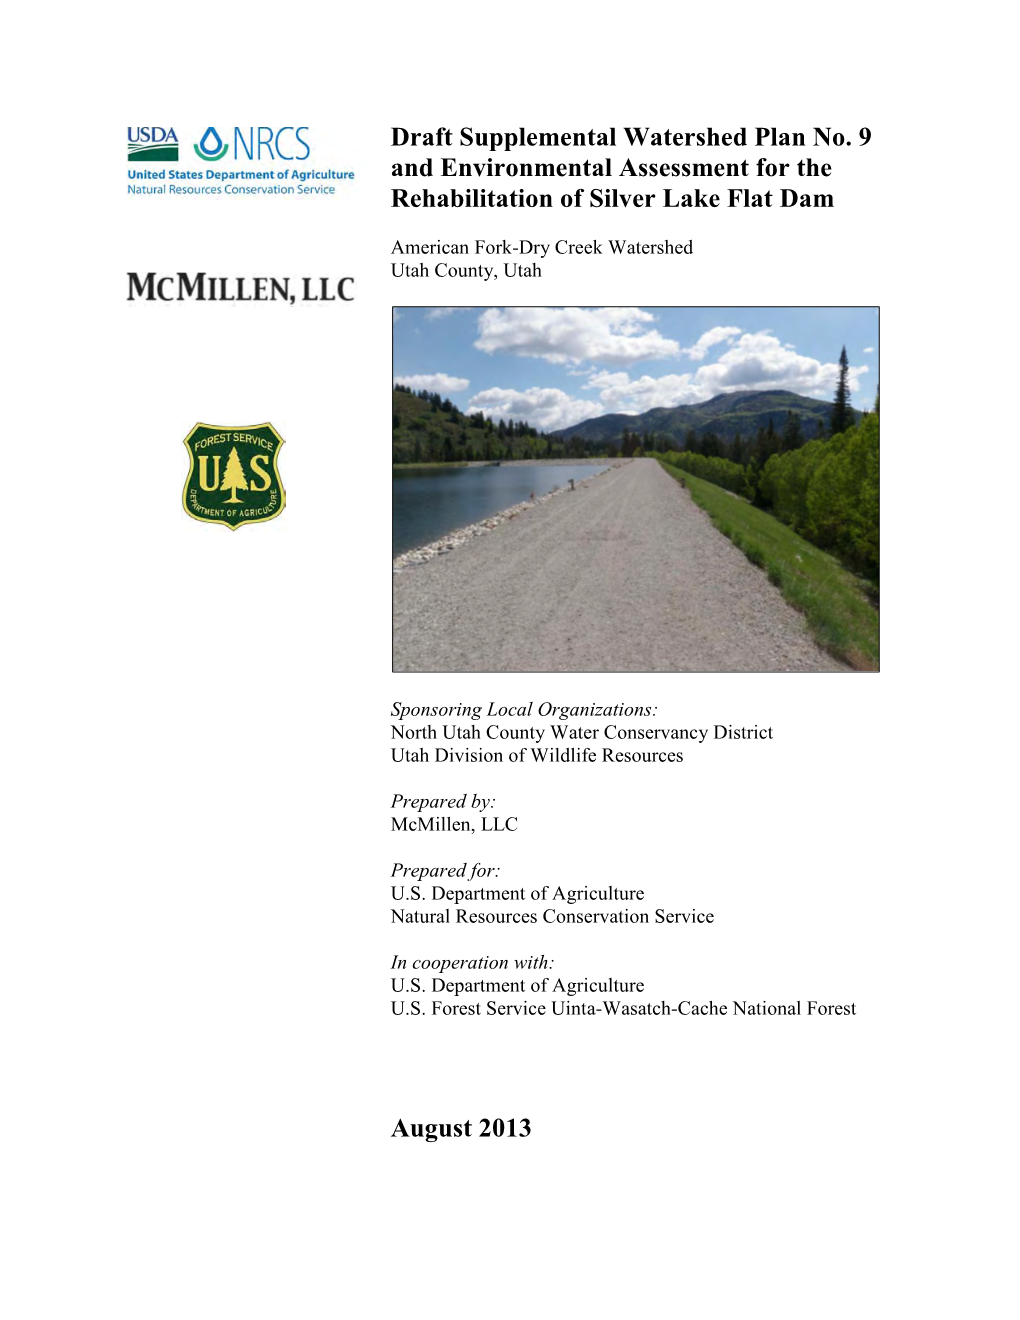 Silver Lake Flat Dam Draft Plan-EA Report